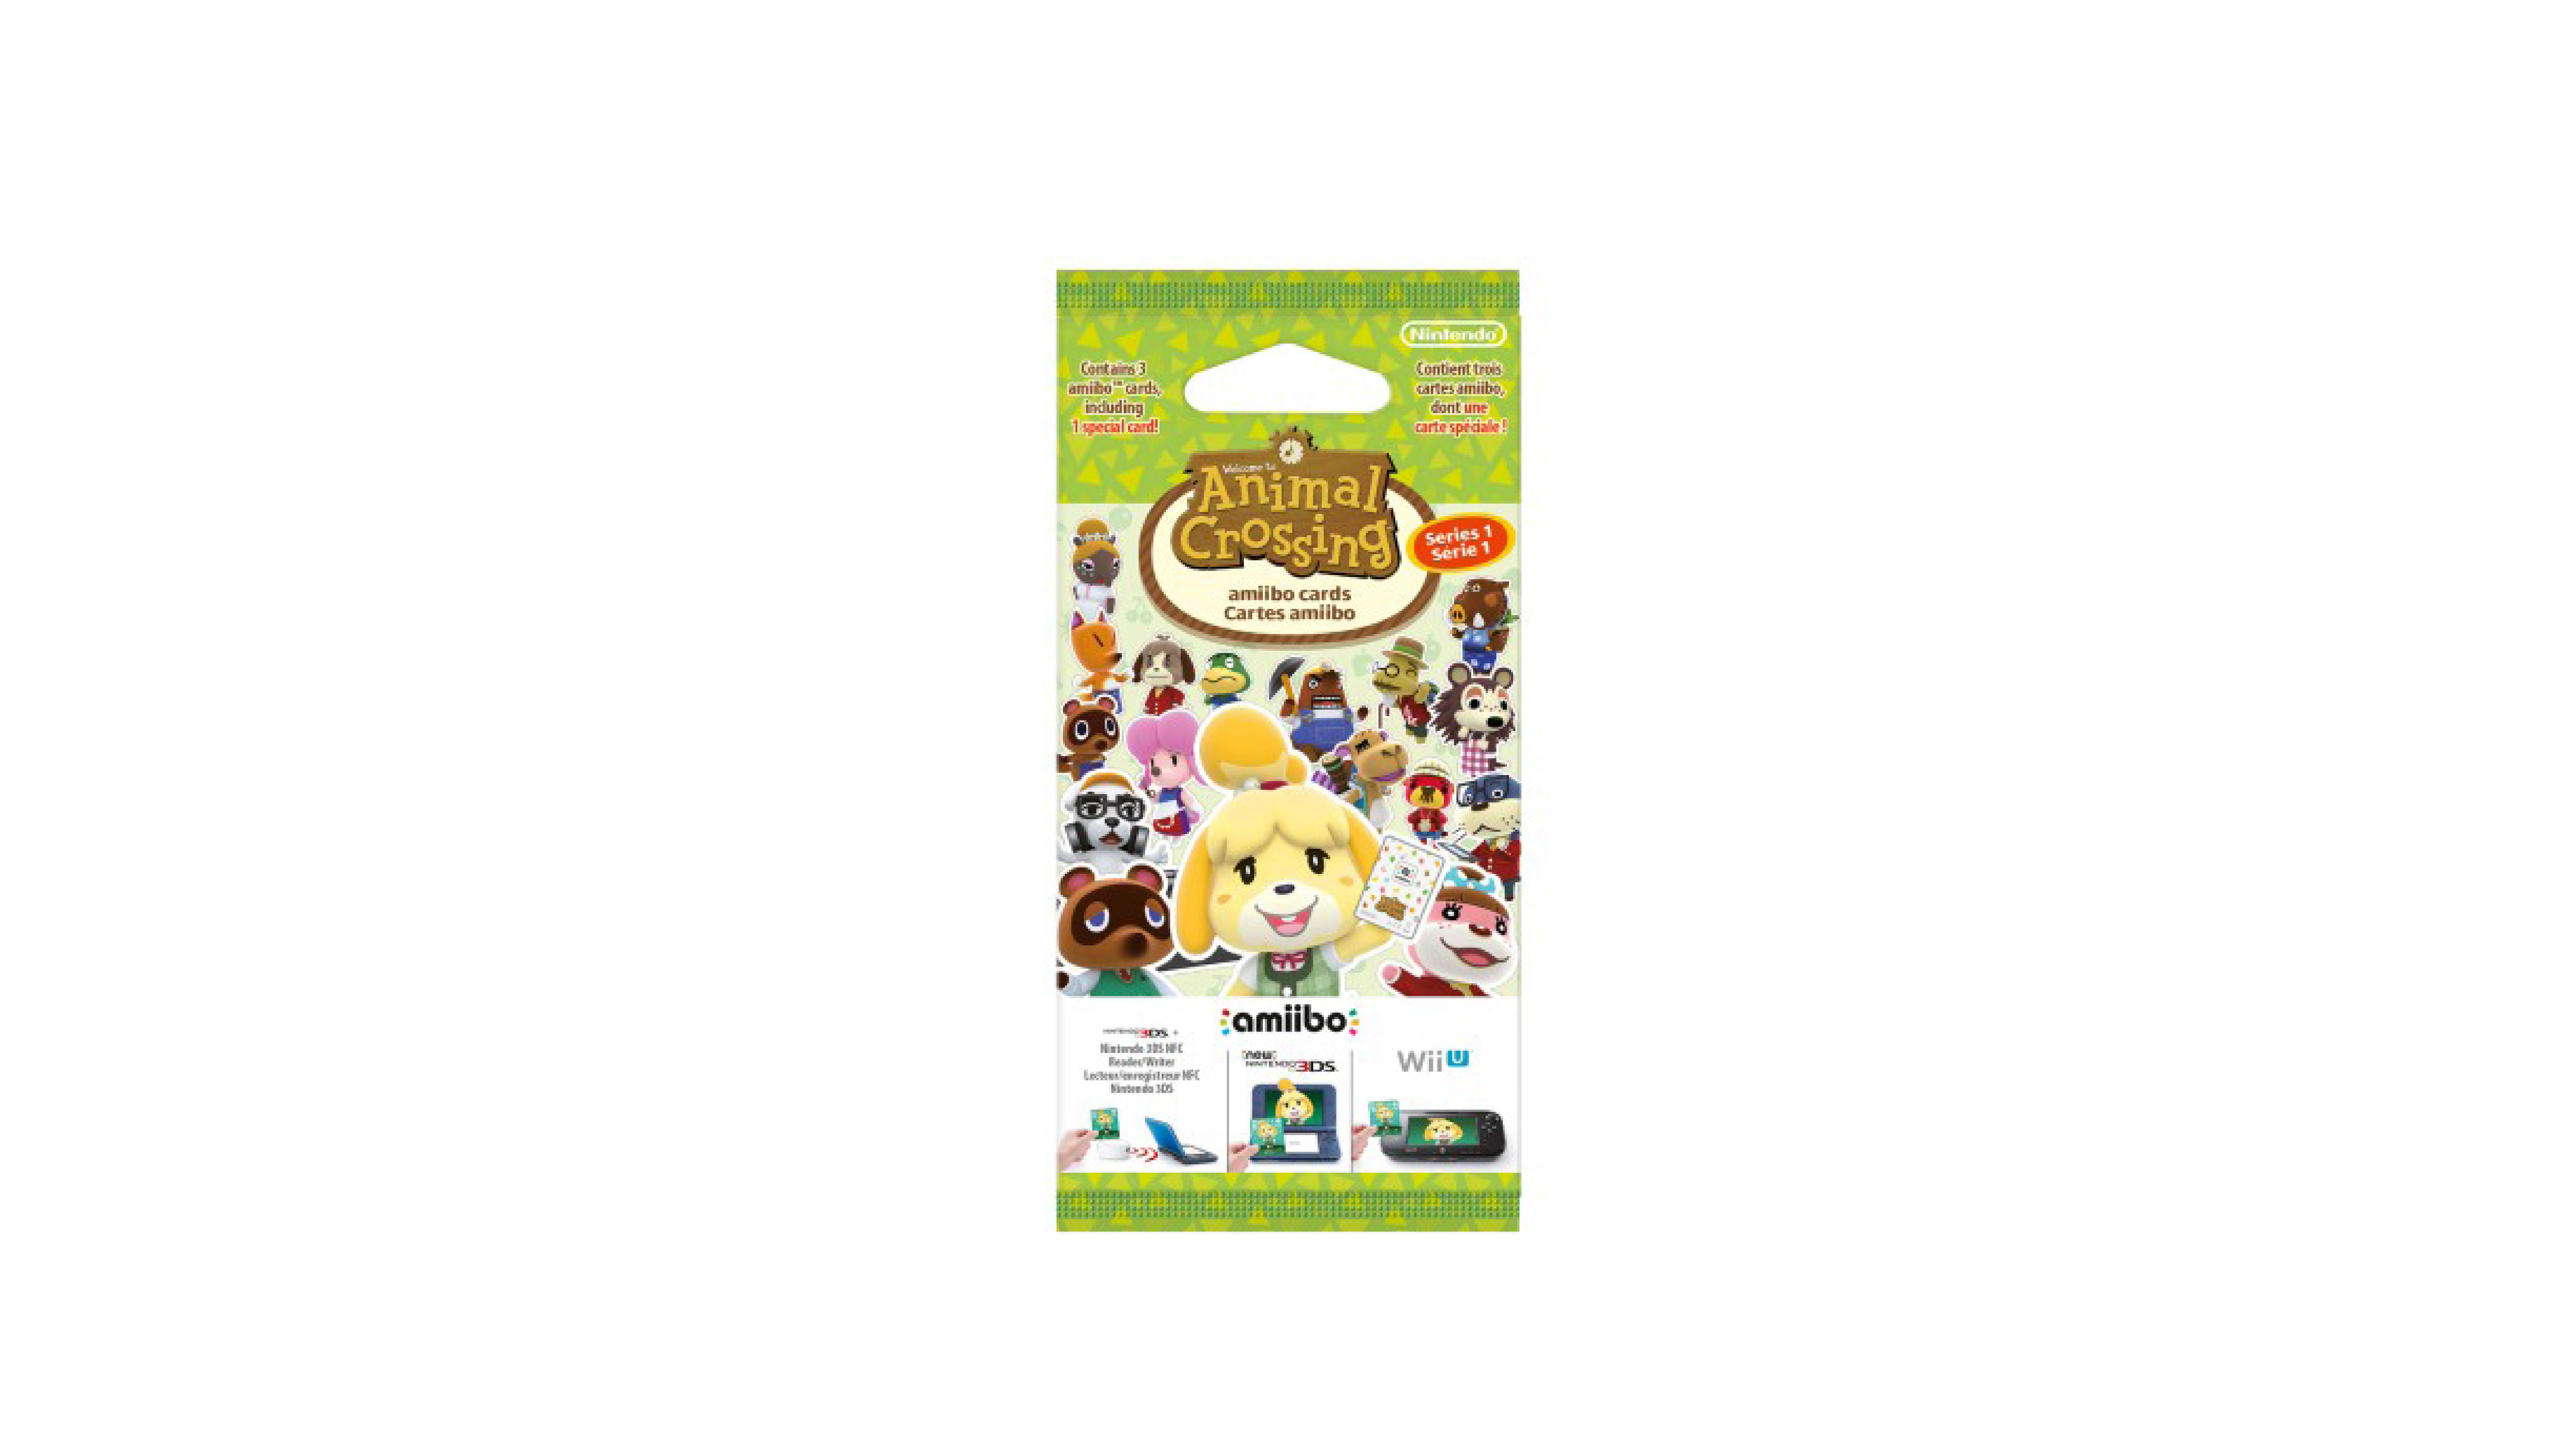 Animal Crossing amiibo cards - series 1 IMG